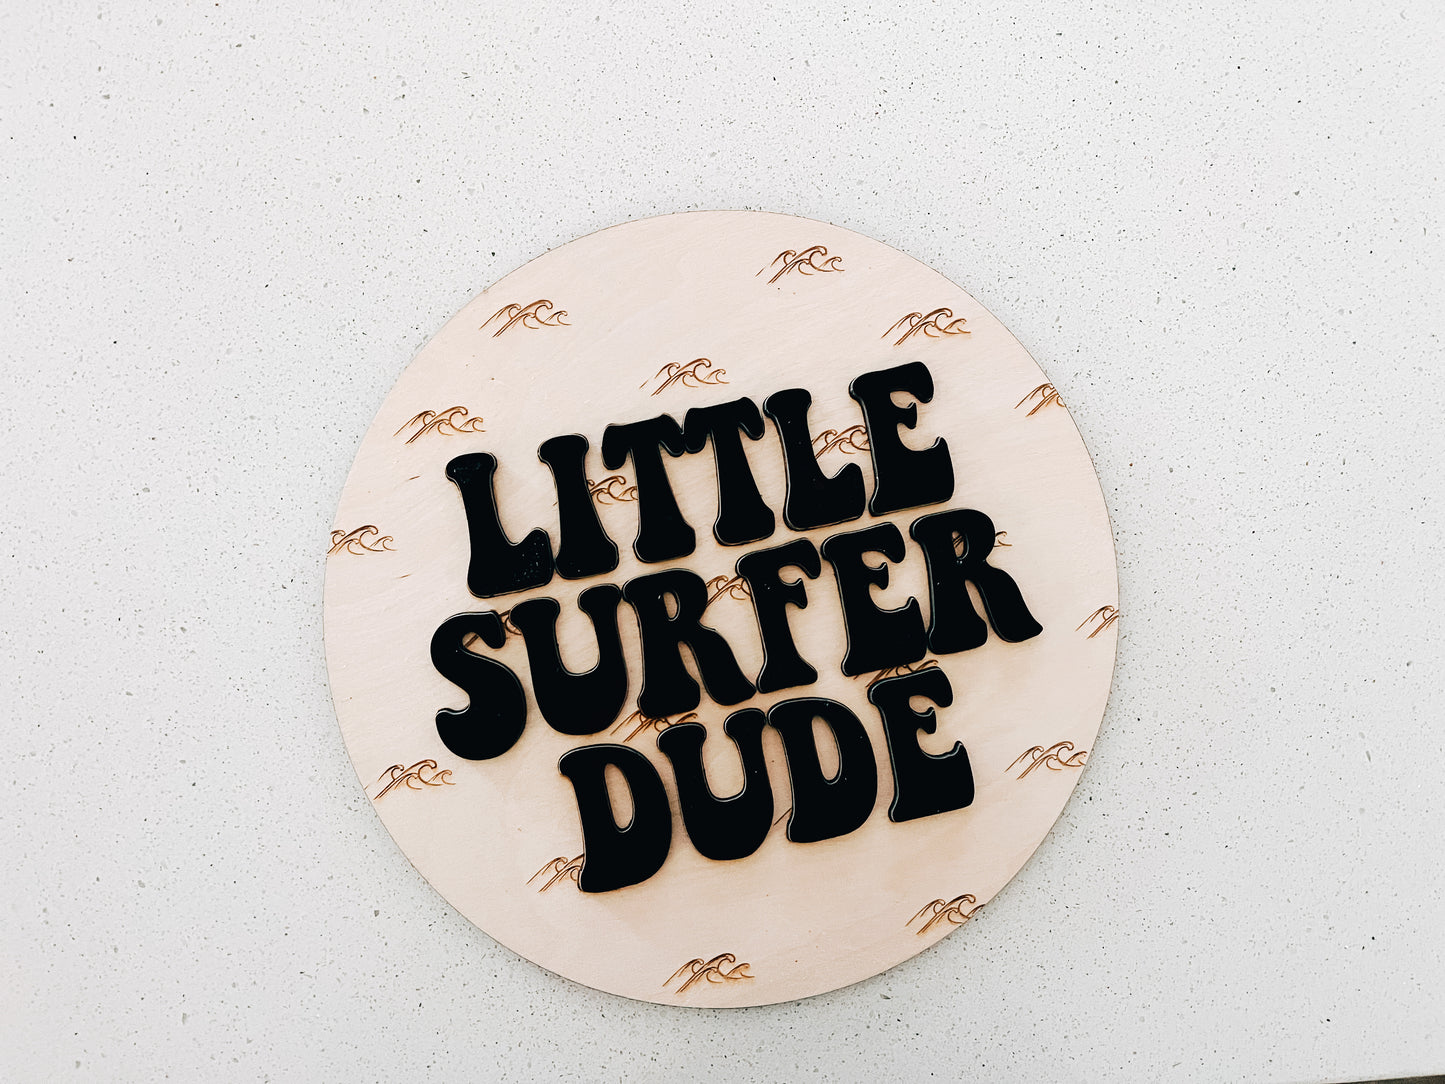 Little Surfer Dude Sign